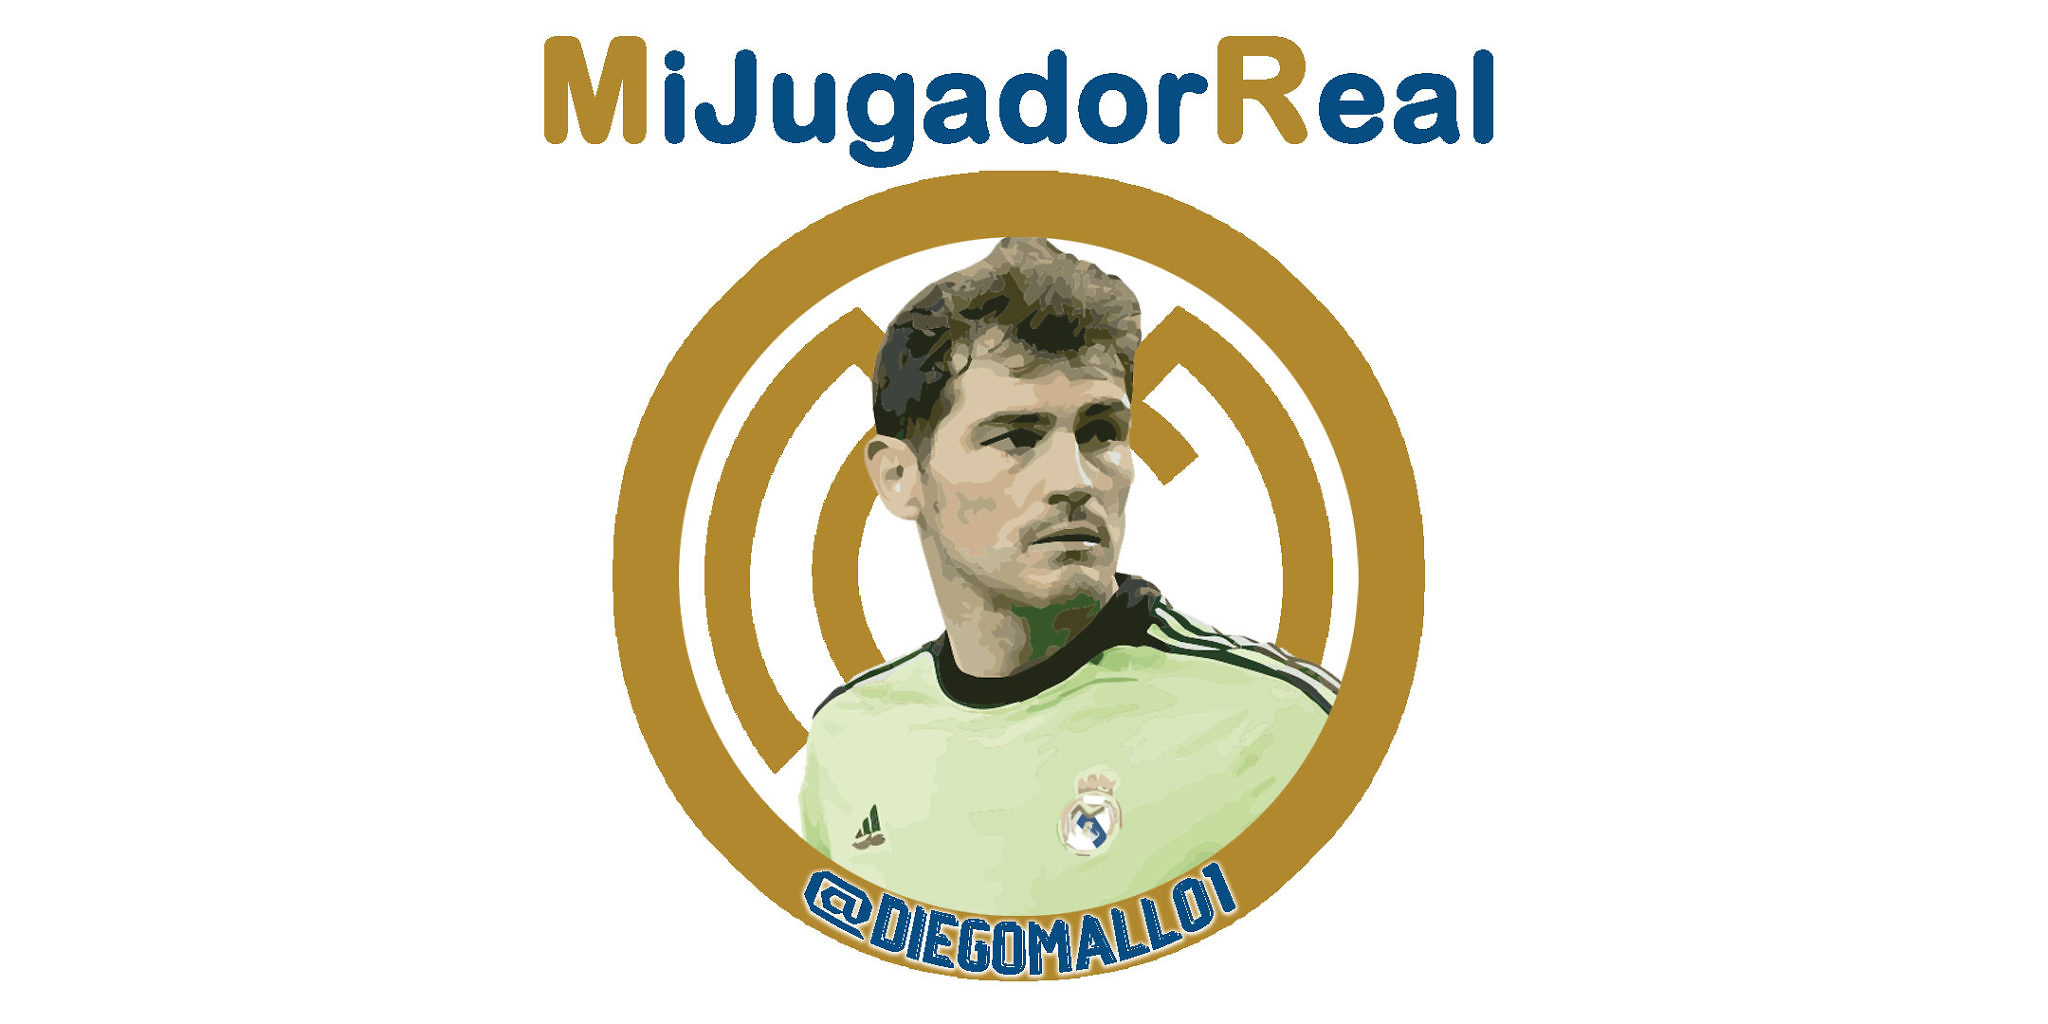 #MiJugadorReal | @diegomallo1